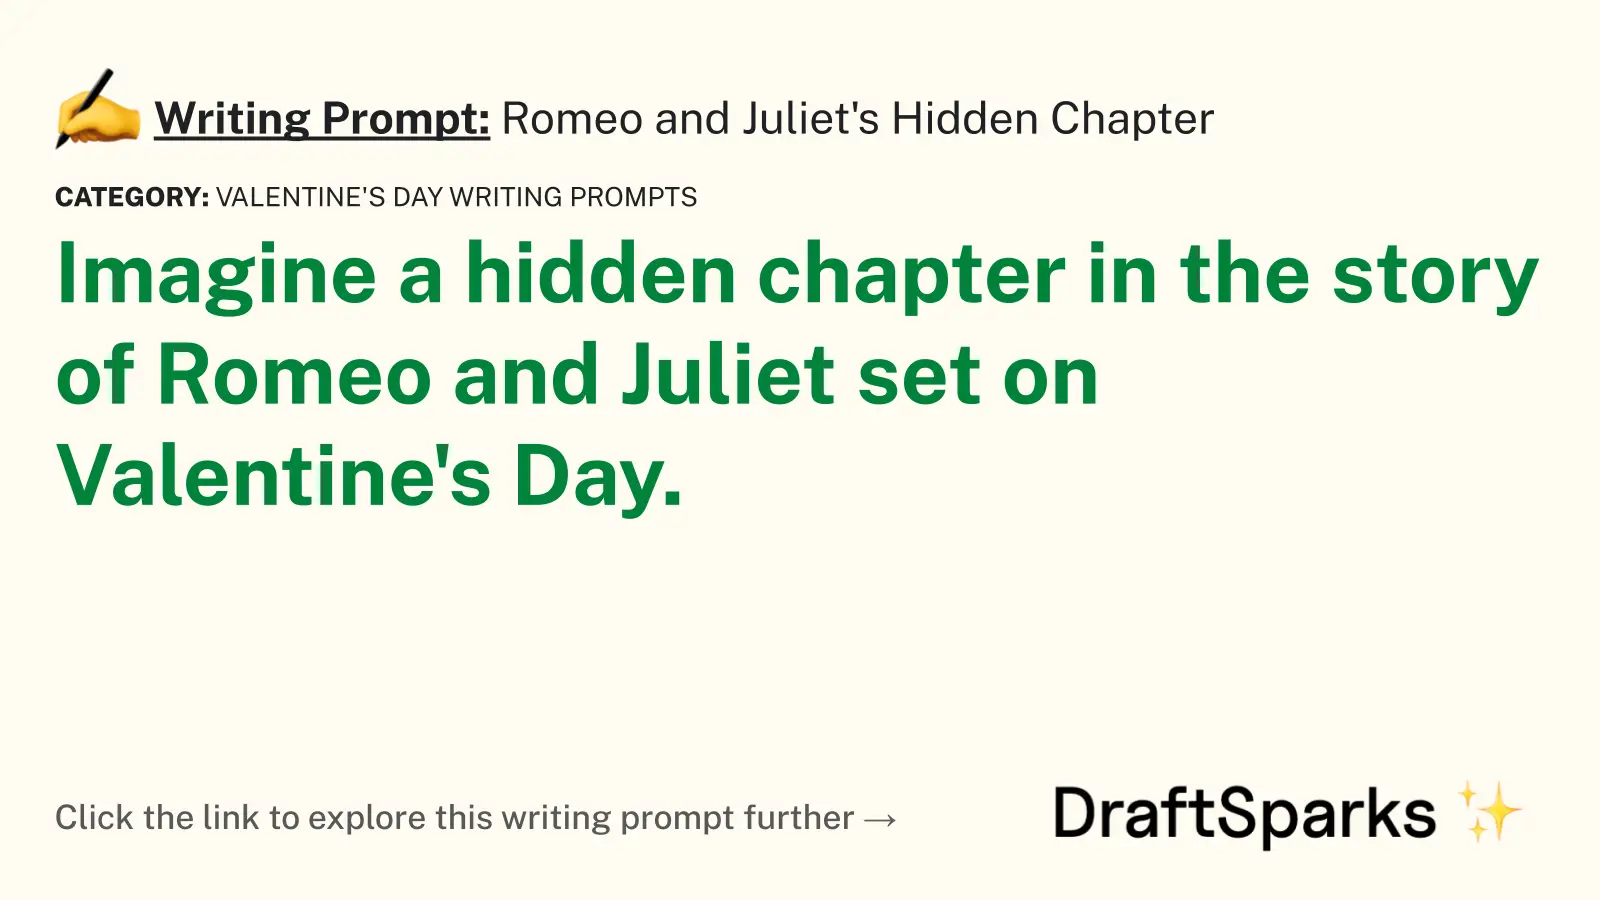 Romeo and Juliet’s Hidden Chapter